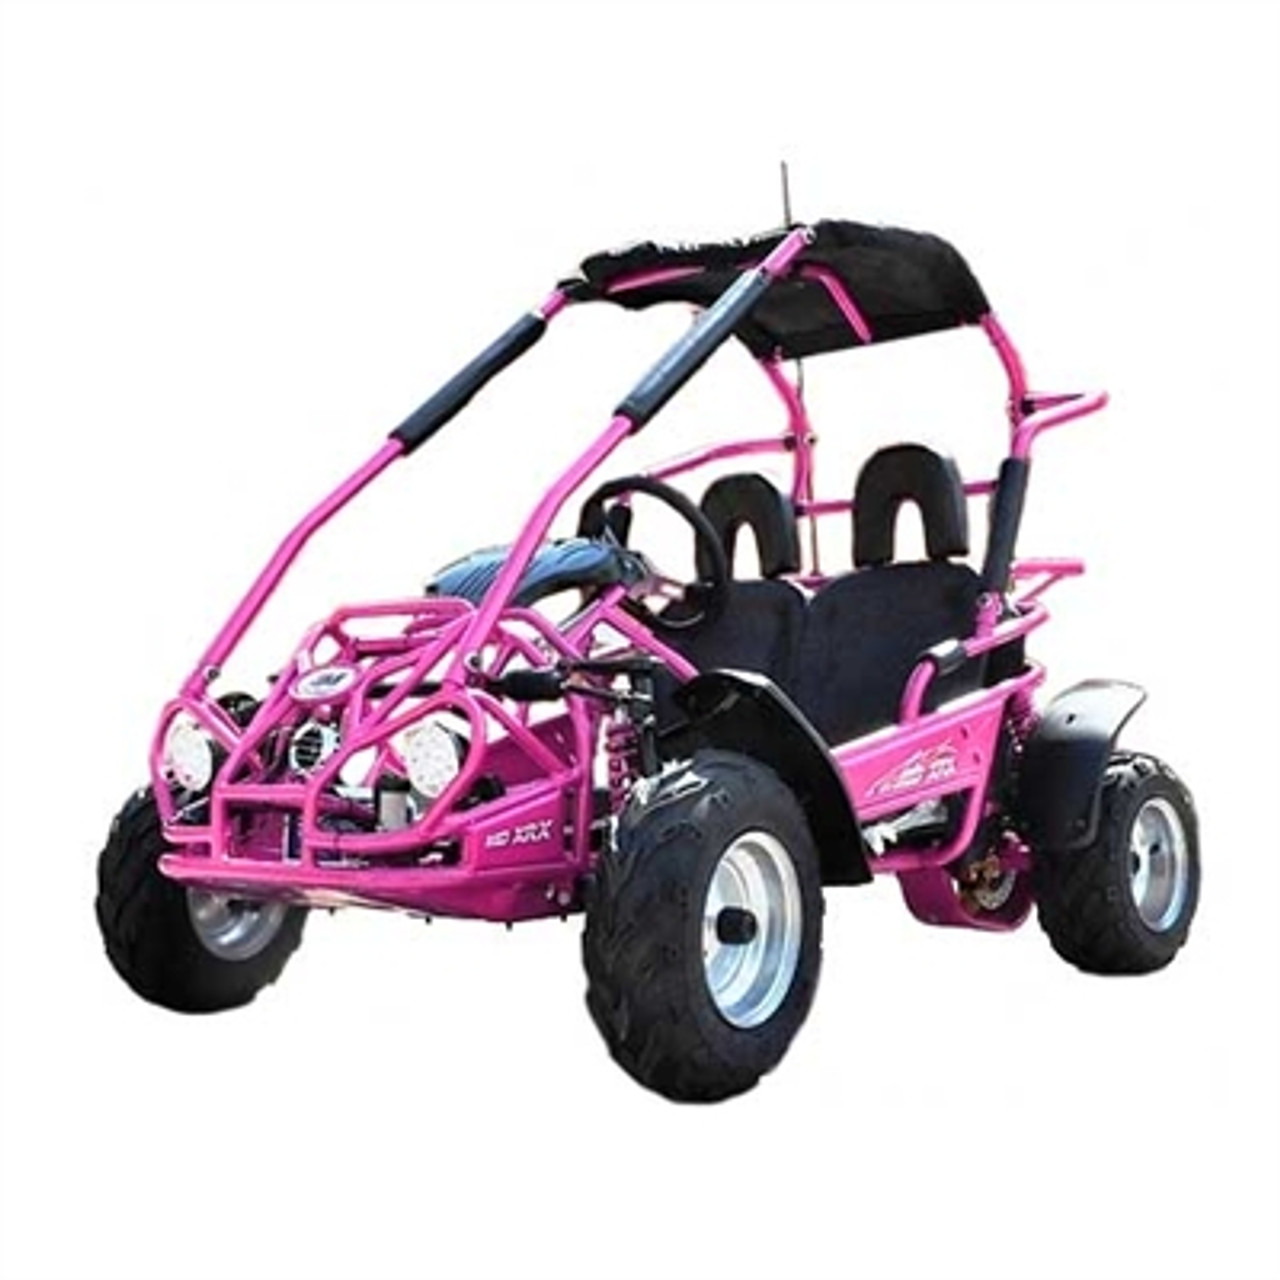 TrailMaster MID XRXR Go-Kart With Reverse (TM-MIDXRXR) in Pink